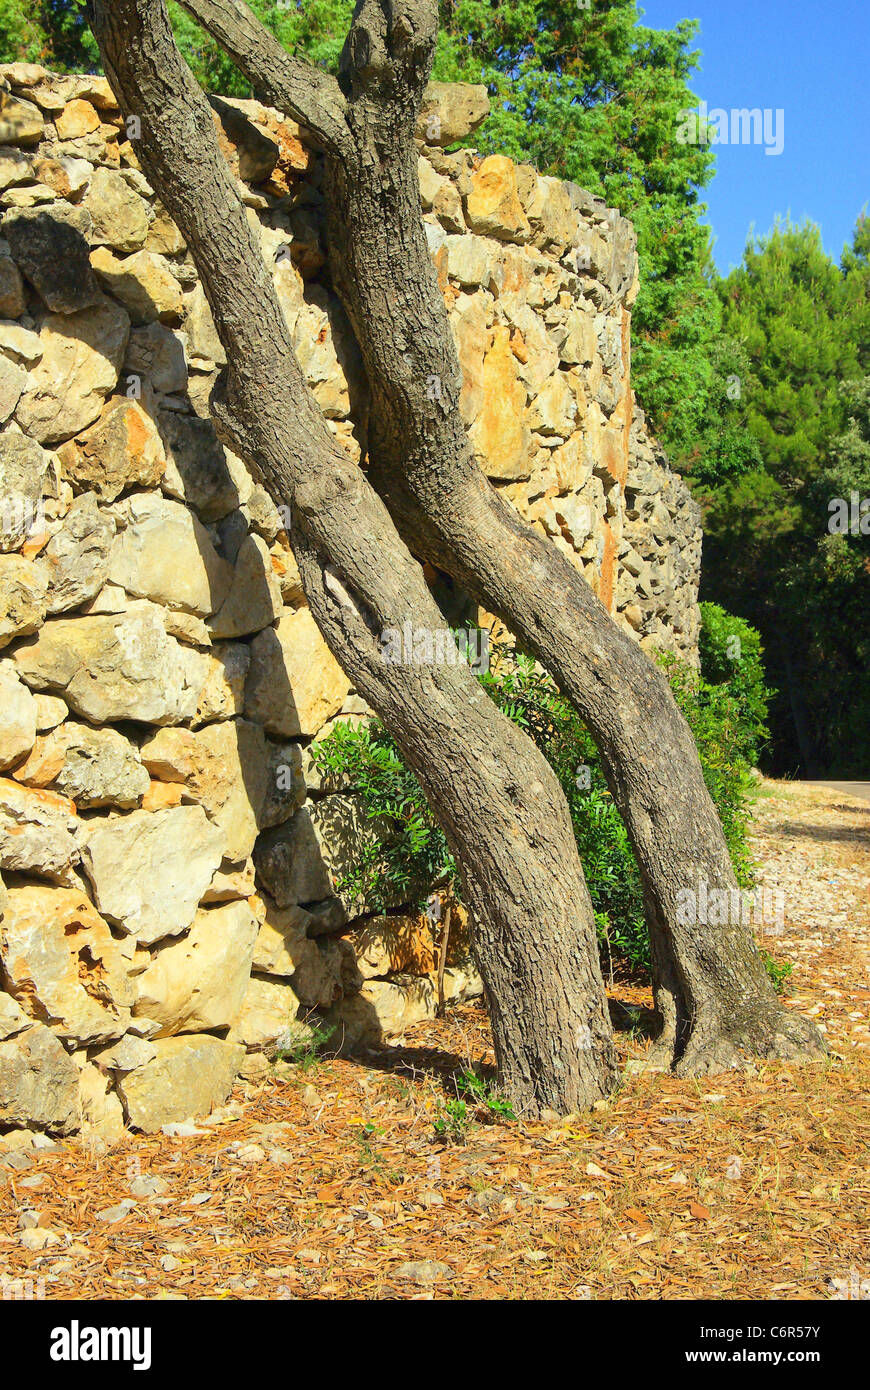 Olivenbaum an Mauer - olive tree on wall 02 Stock Photo